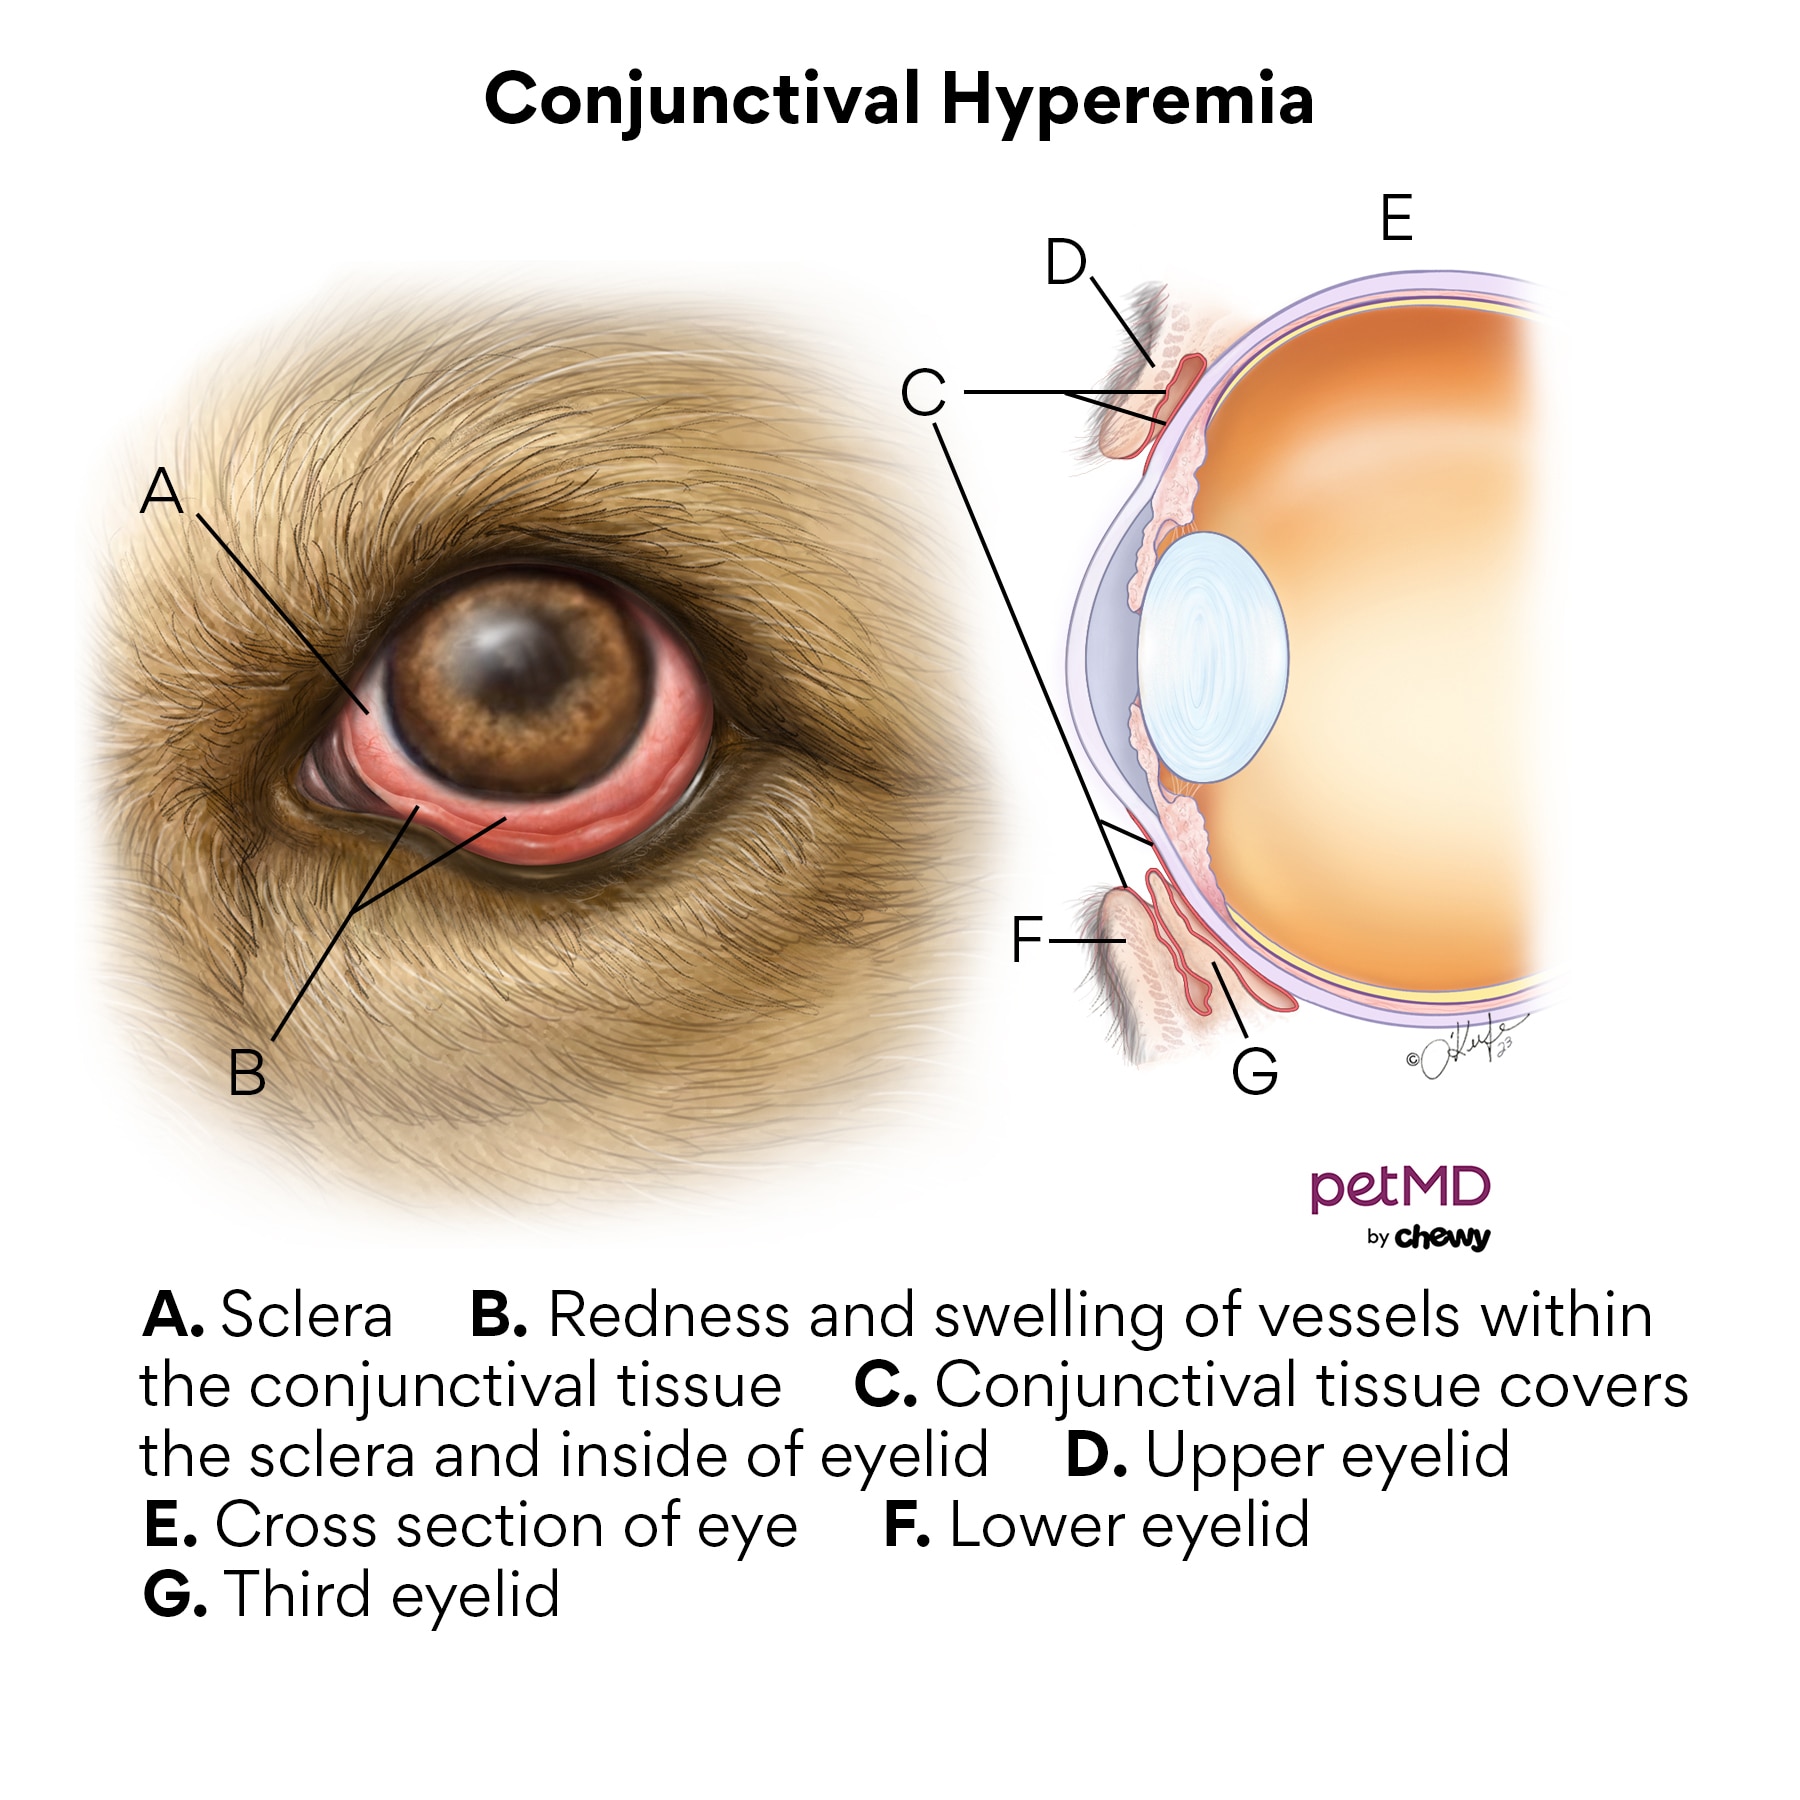 Conjunctival hyperemia